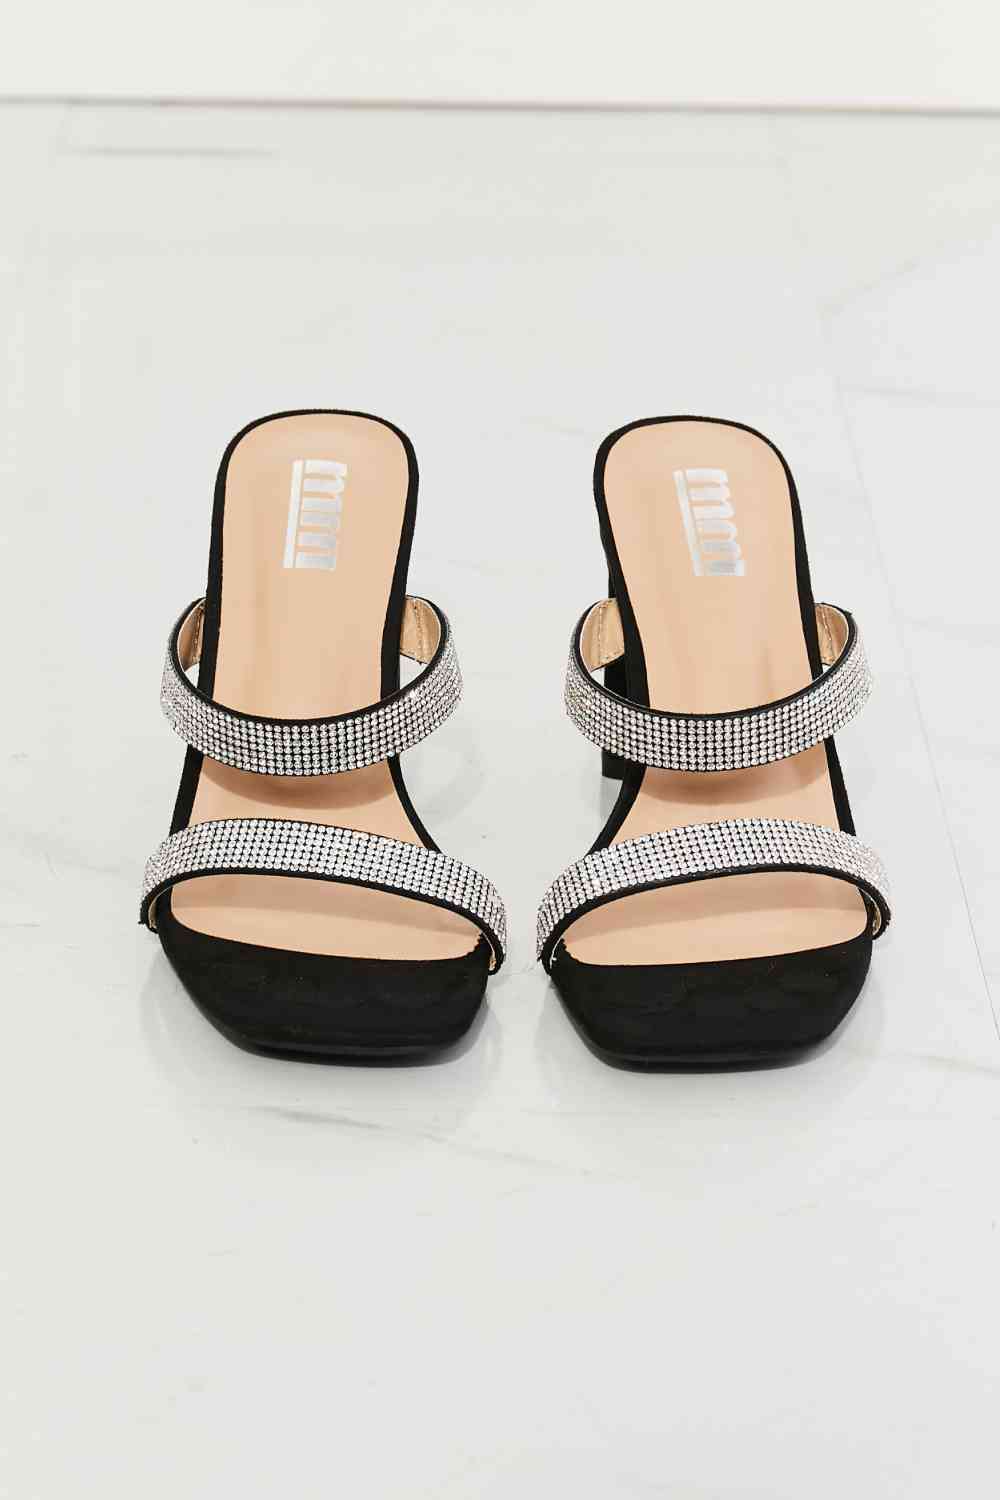 Leave A Little Sparkle Rhinestone Block Heel Sandal in Black - Accessories - Shoes - 4 - 2024